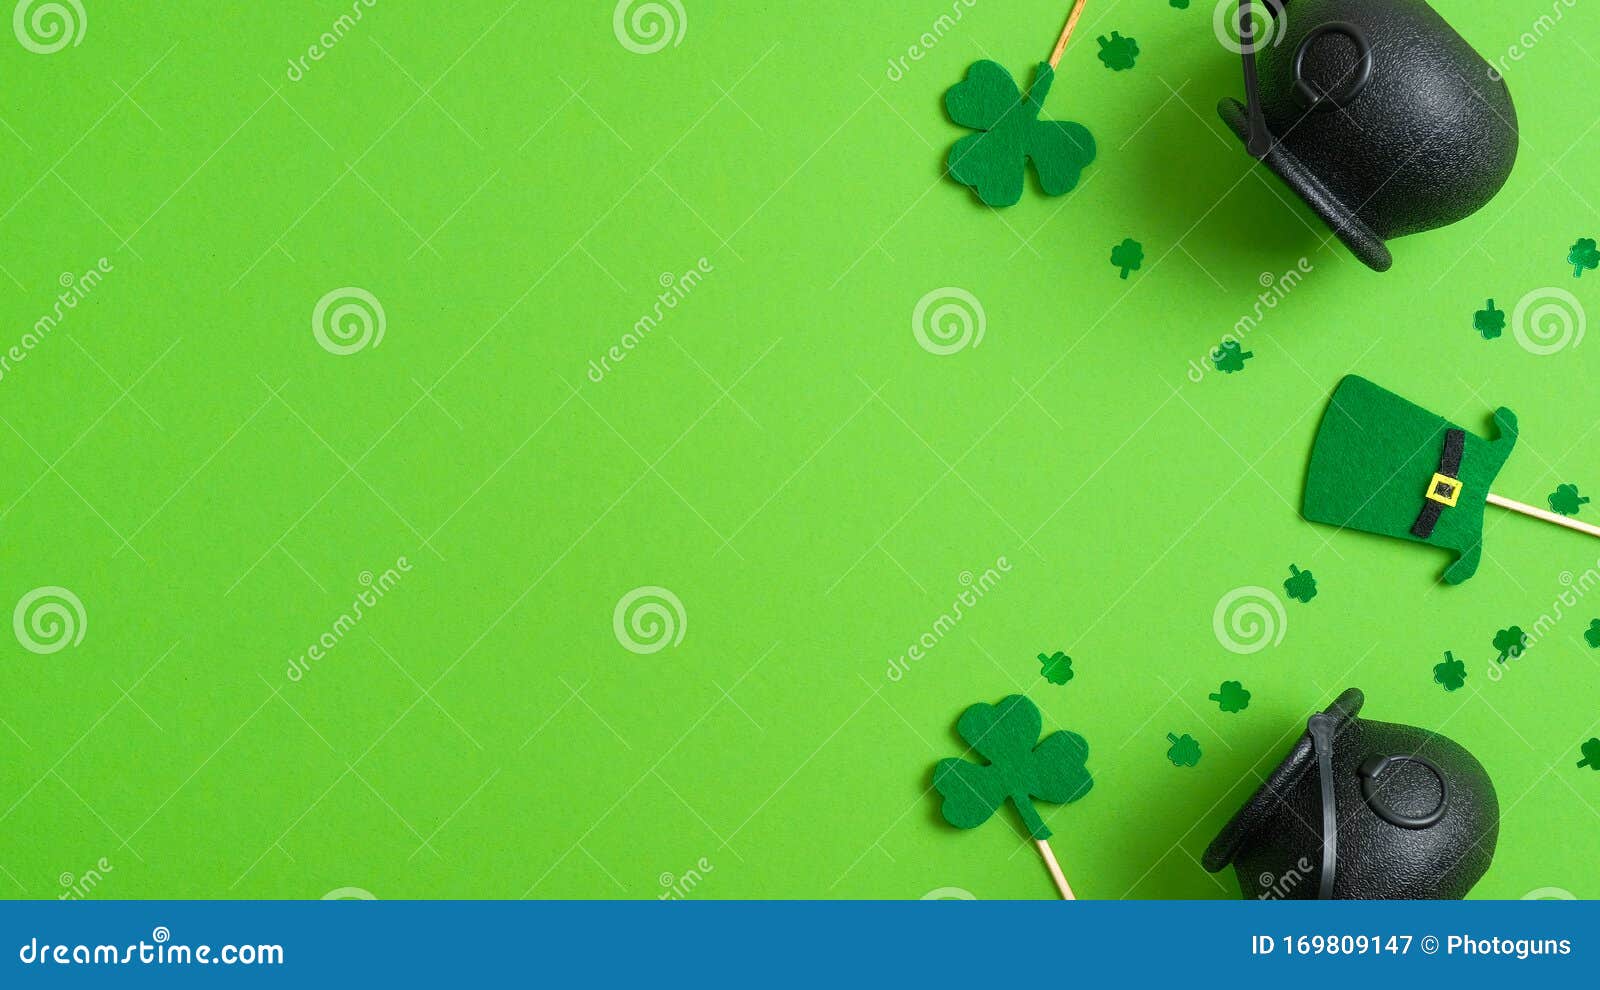 SZZWY 8x6.5ft Happy St Patricks Day Backdrop Saint Patricks Day Decor Banner Leprechaun Hat Glitter Shamrock Gold Irish Lucky Day Background for Photography